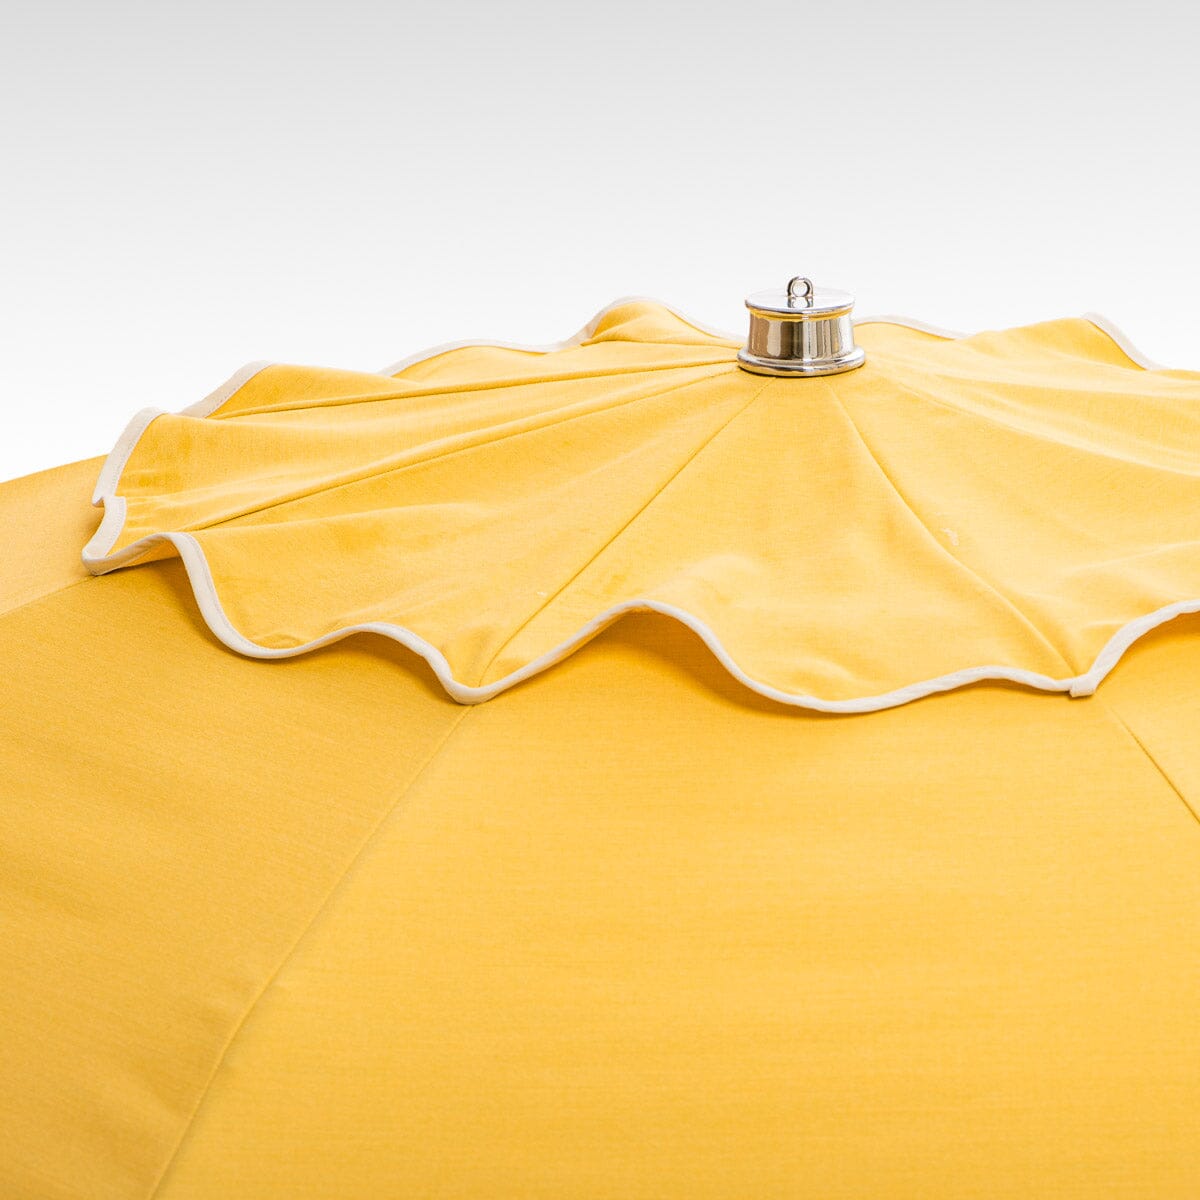 chrome top cap detail on yellow patio umbrella